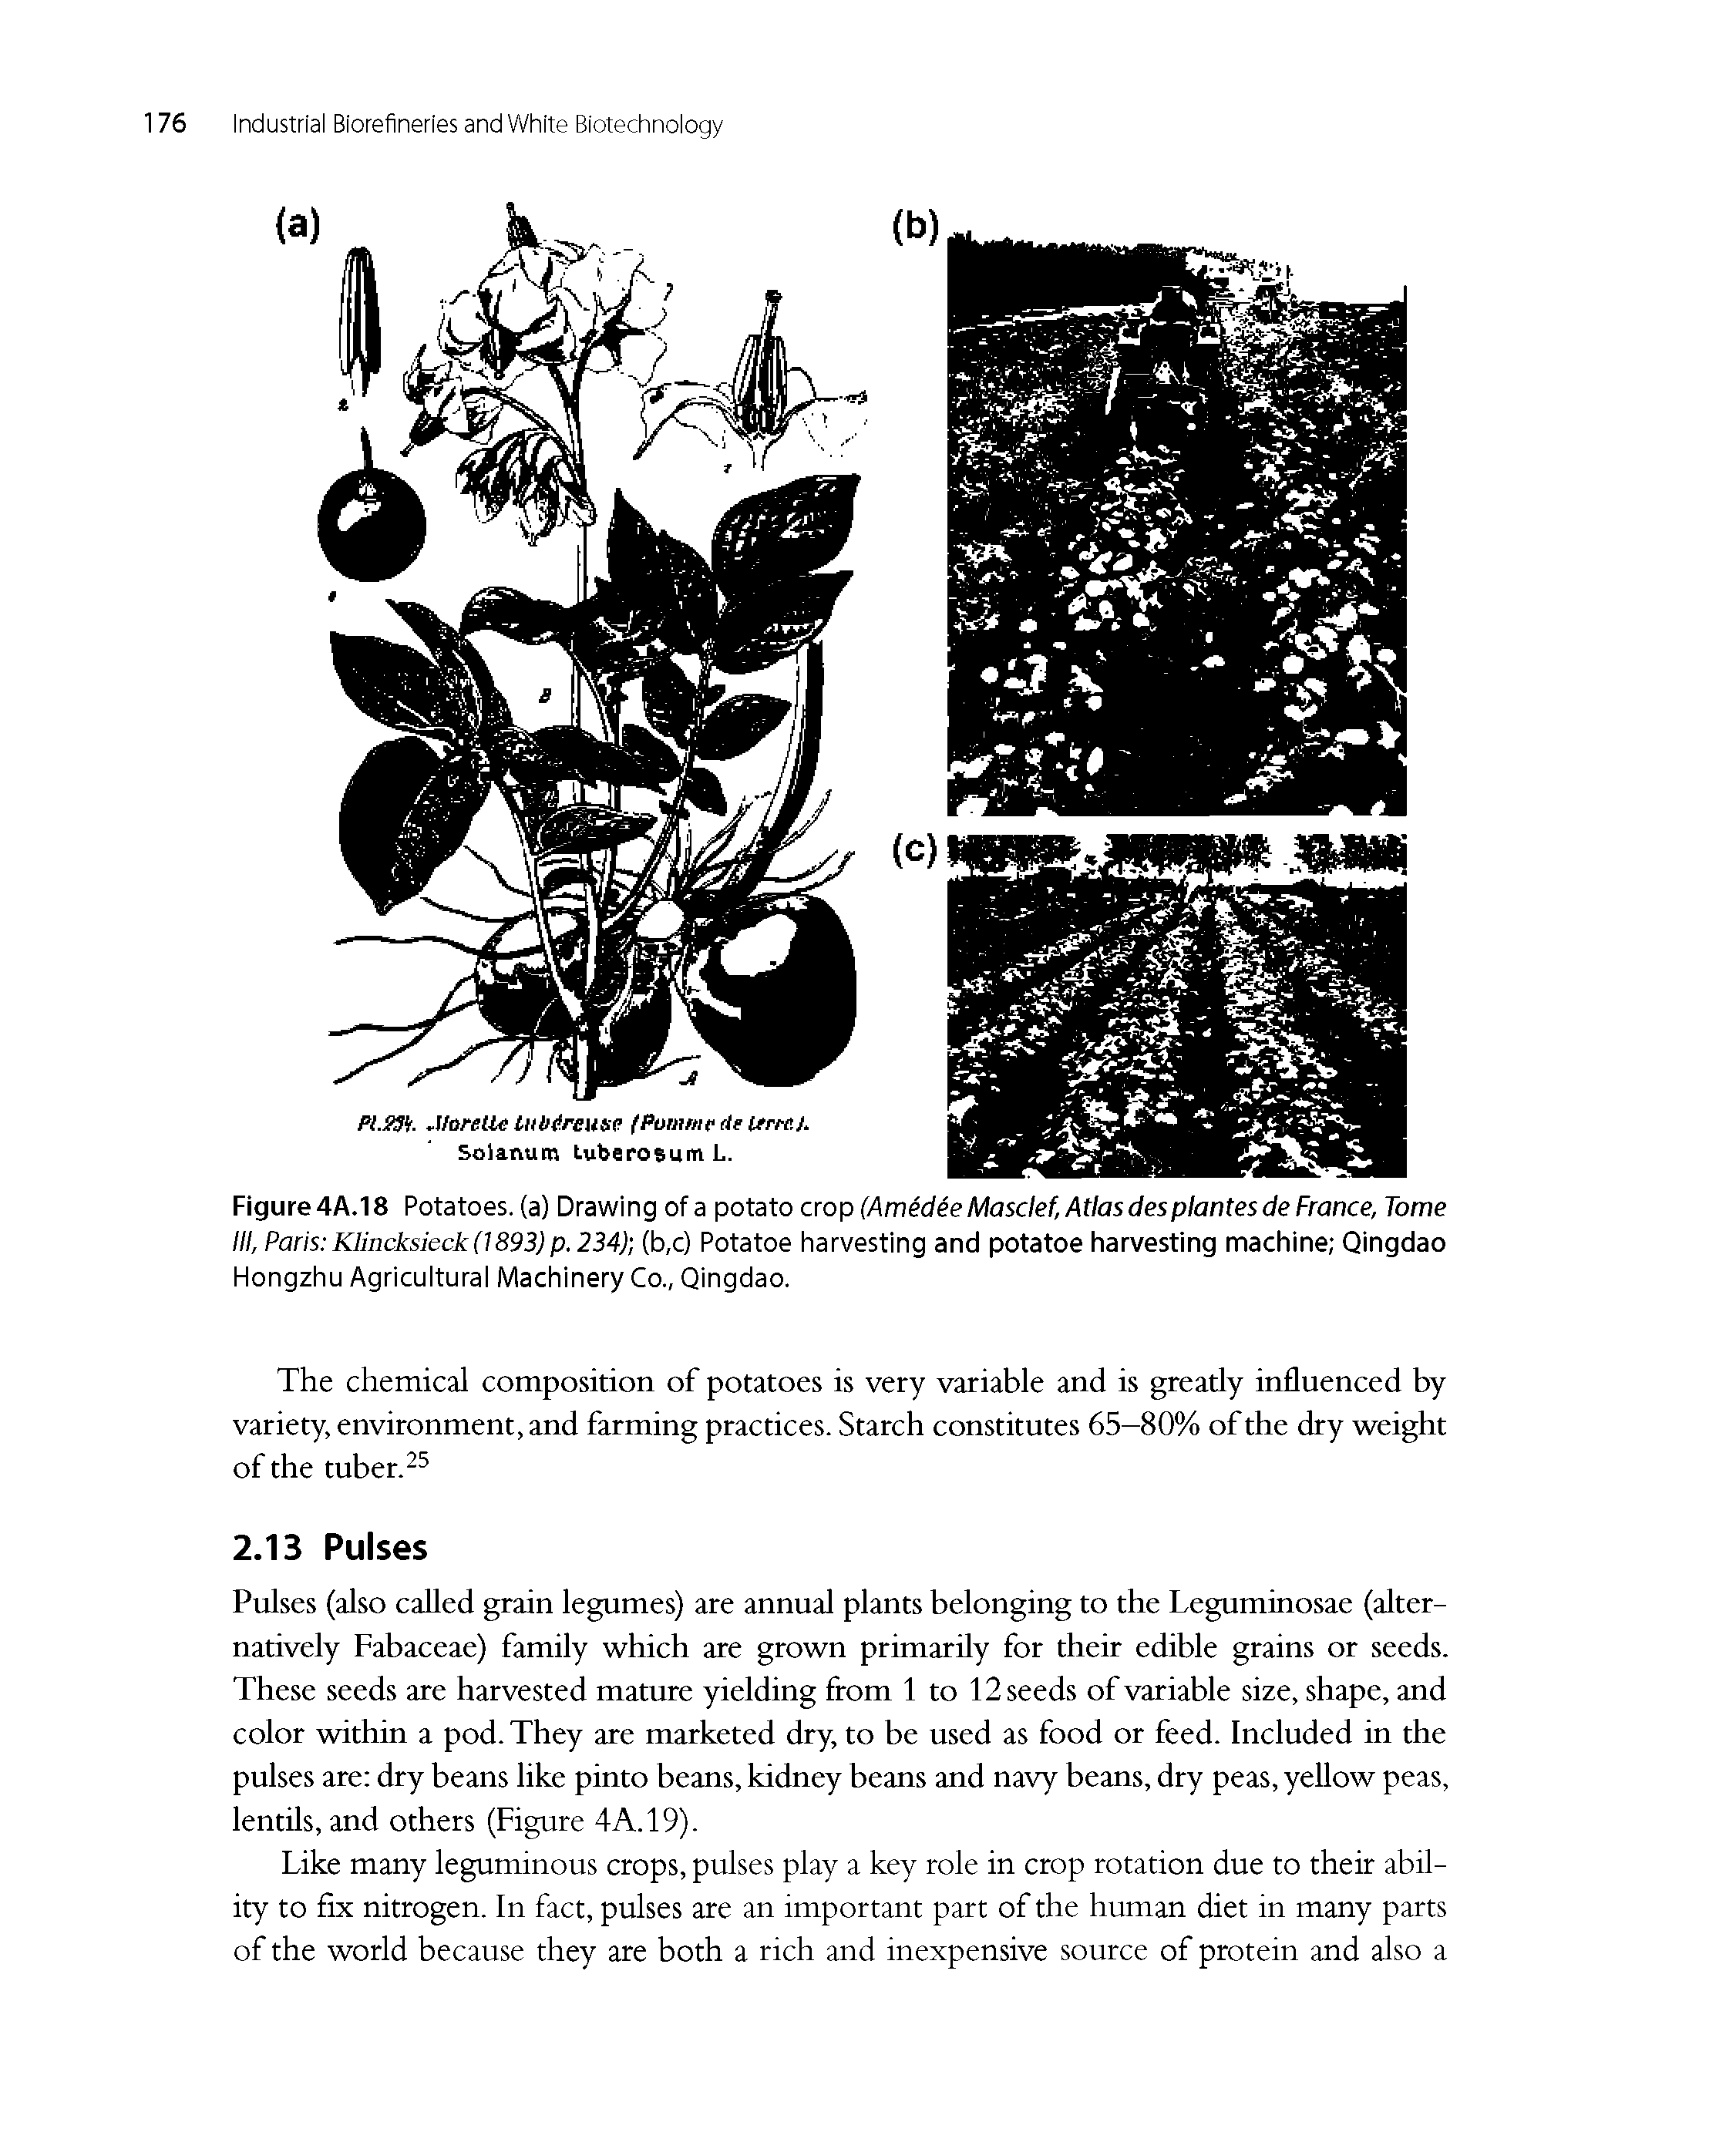 Figure 4A.18 Potatoes, (a) Drawing of a potato crop (Amidie Masclef, Atlasdesplantesde France, Tome III, Paris Klincksieck(1893)p. 234) (b,c) Potatoe harvesting and potatoe harvesting machine Qingdao Hongzhu Agricuiturai Machinery Co., Qingdao.